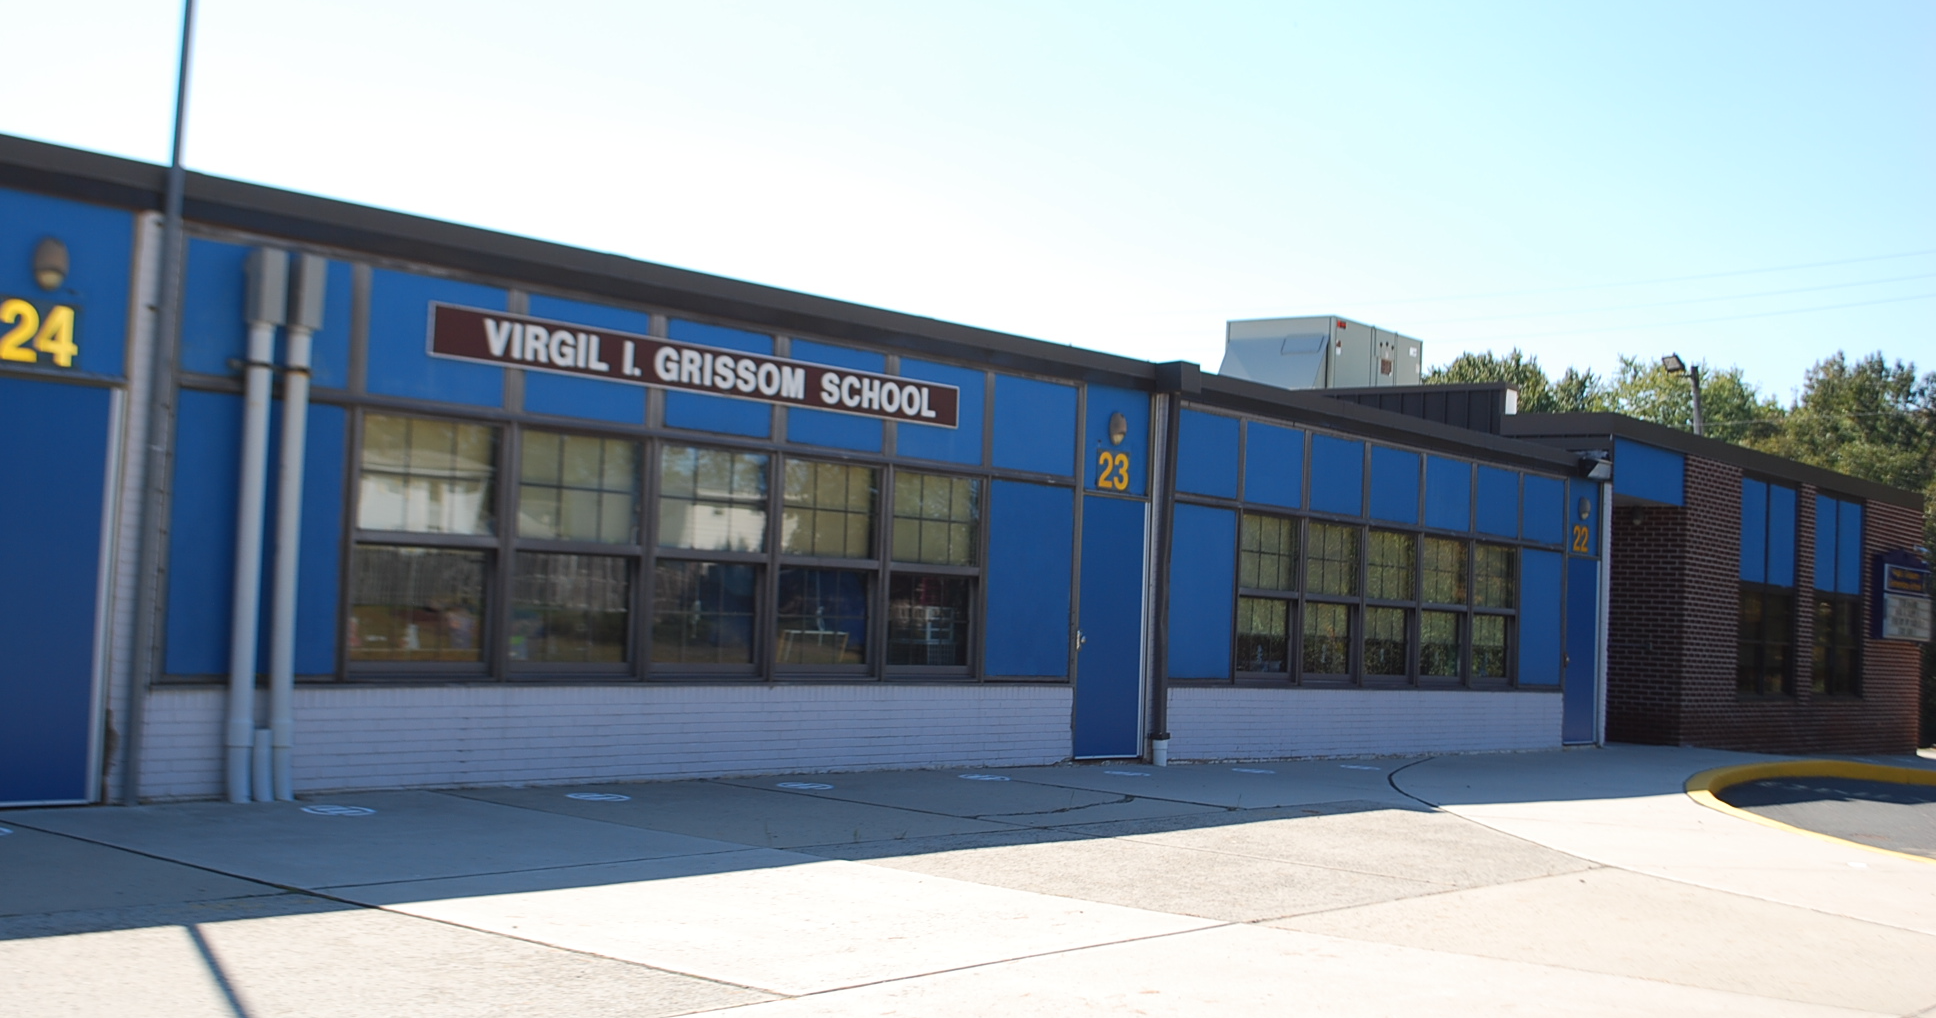 Grissom School